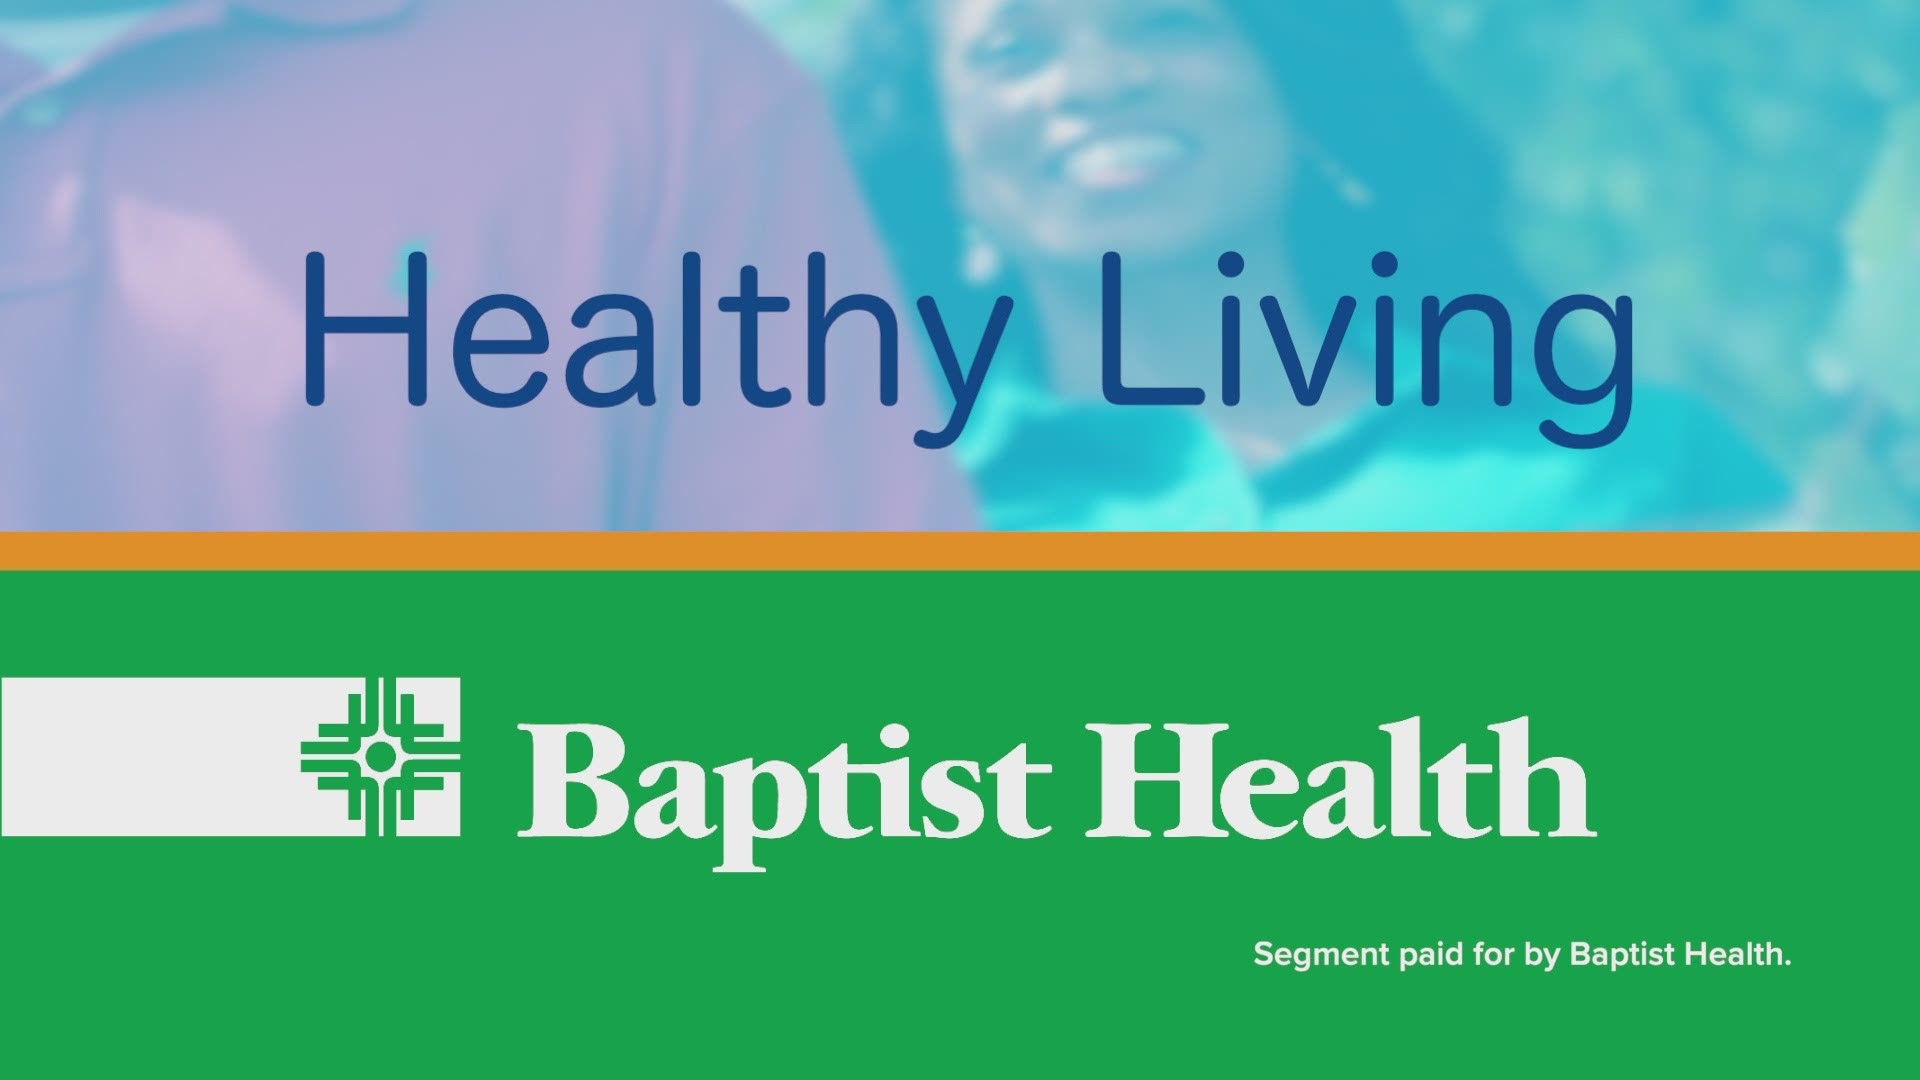 Sponsored by: Baptist Health